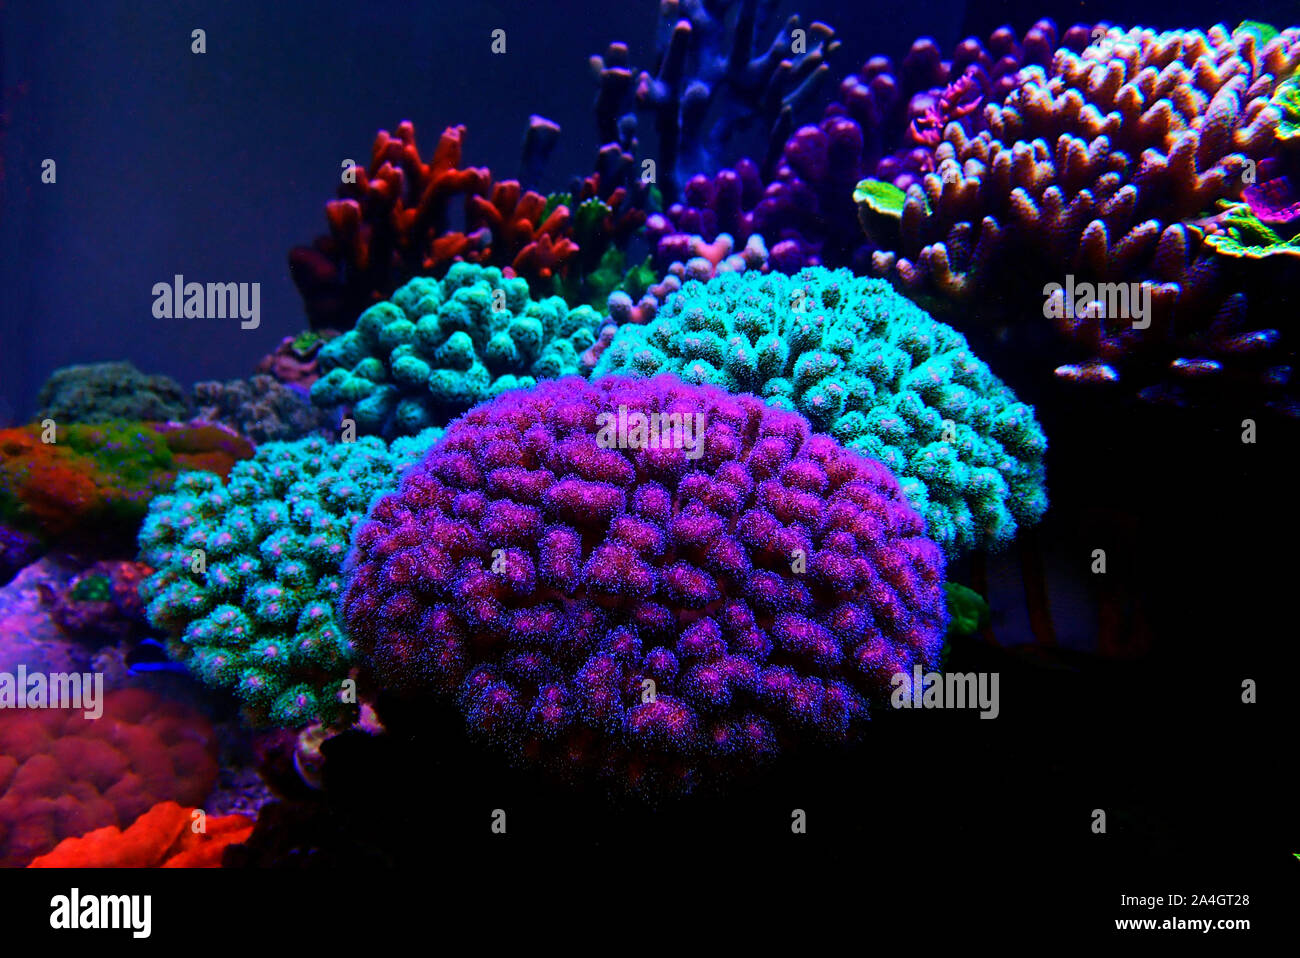 Coral reef fish tank aquarium hi-res stock photography and images - Alamy